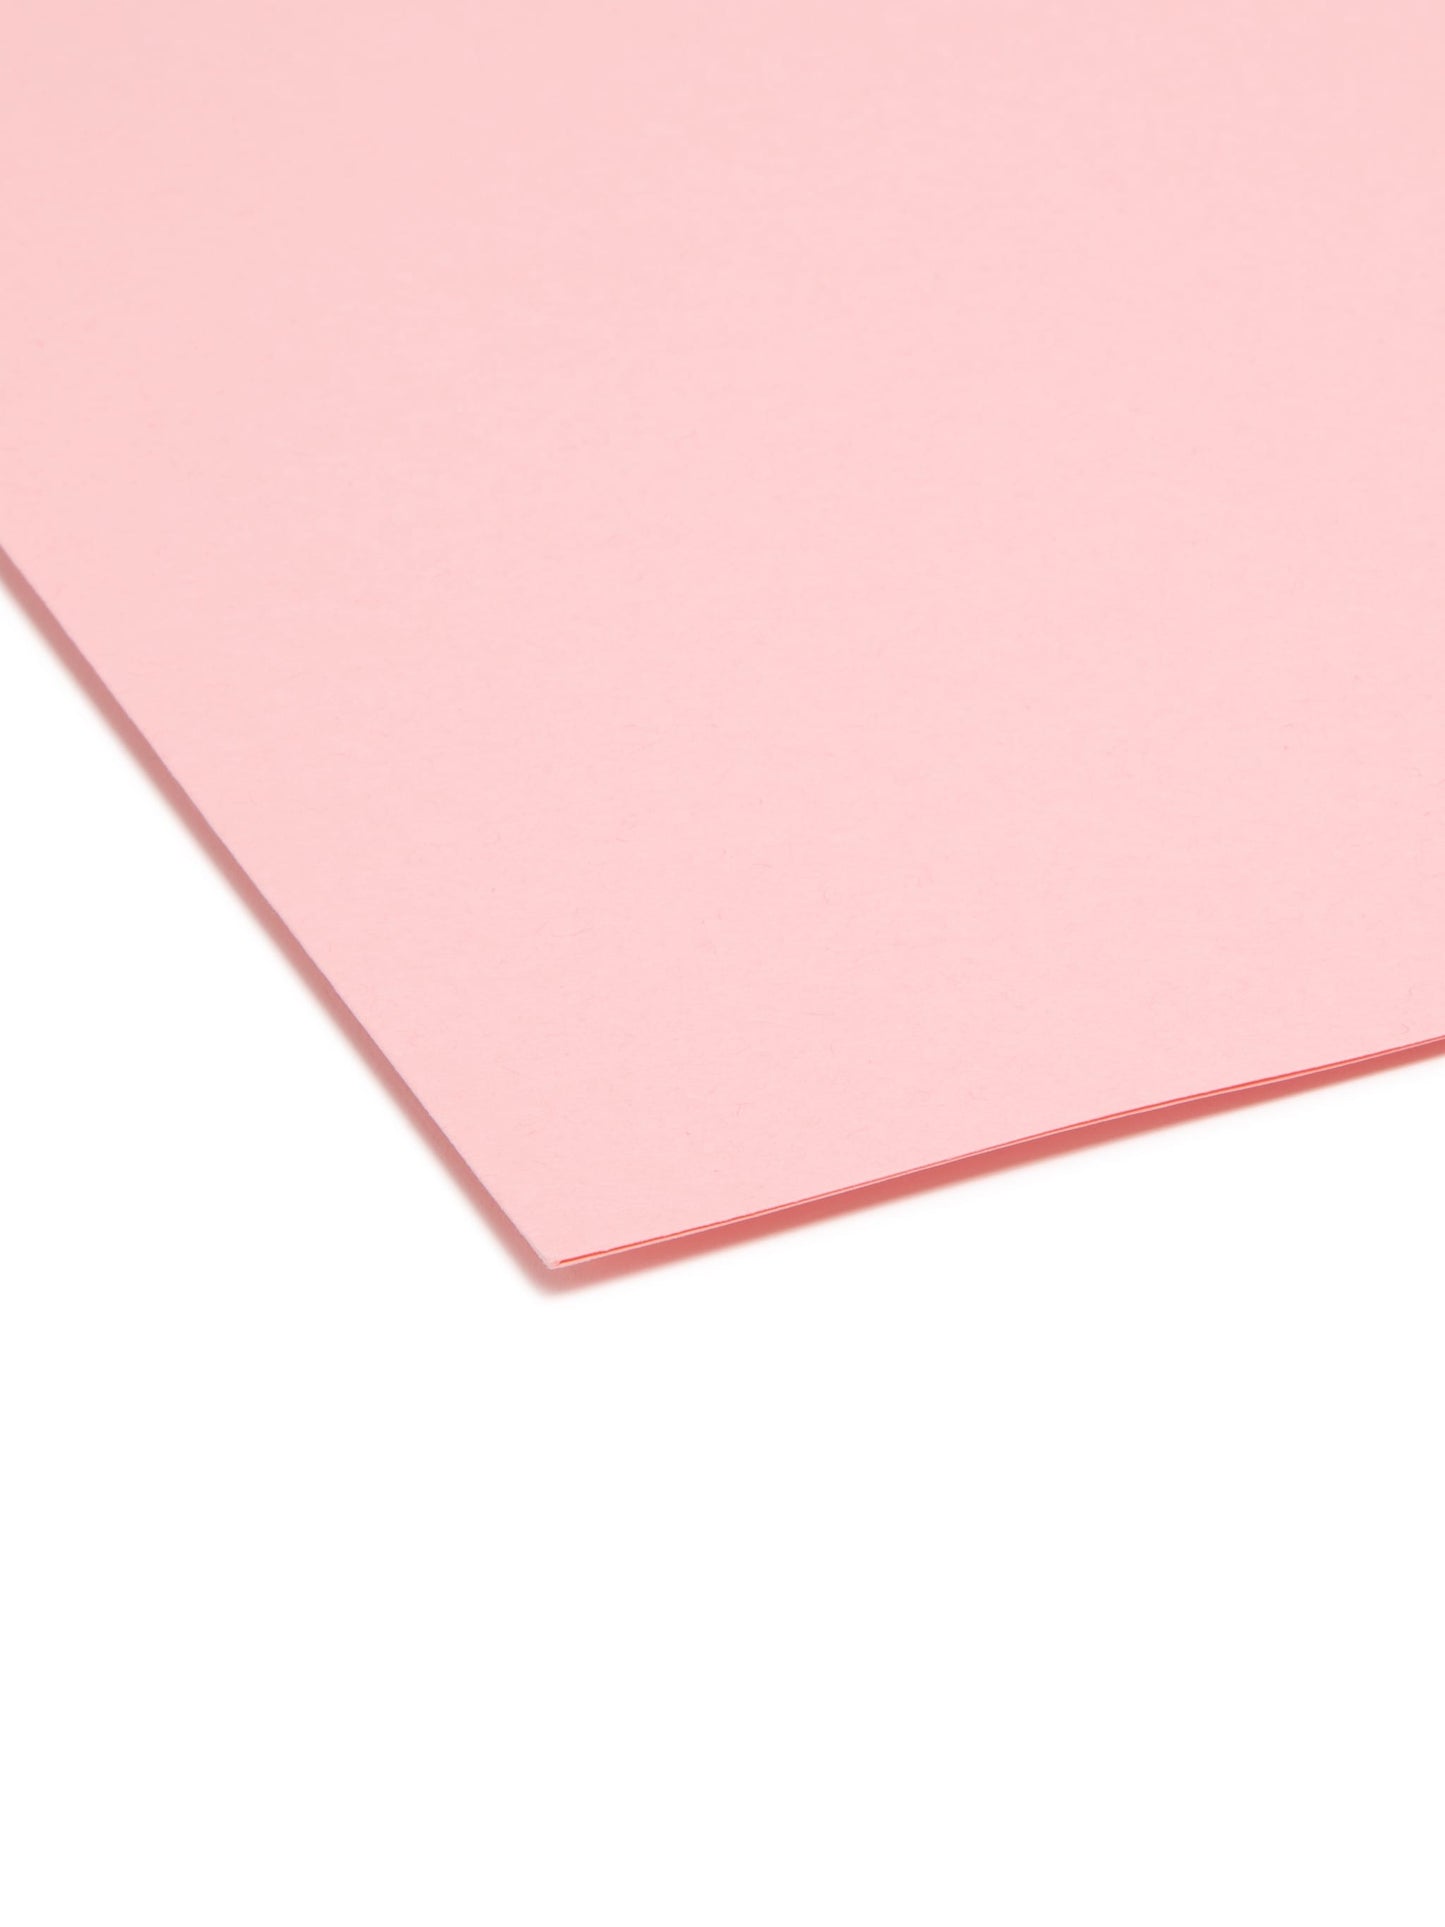 Reinforced Tab File Folders, 1/3-Cut Tab, Pink Color, Letter Size, Set of 100, 086486126342